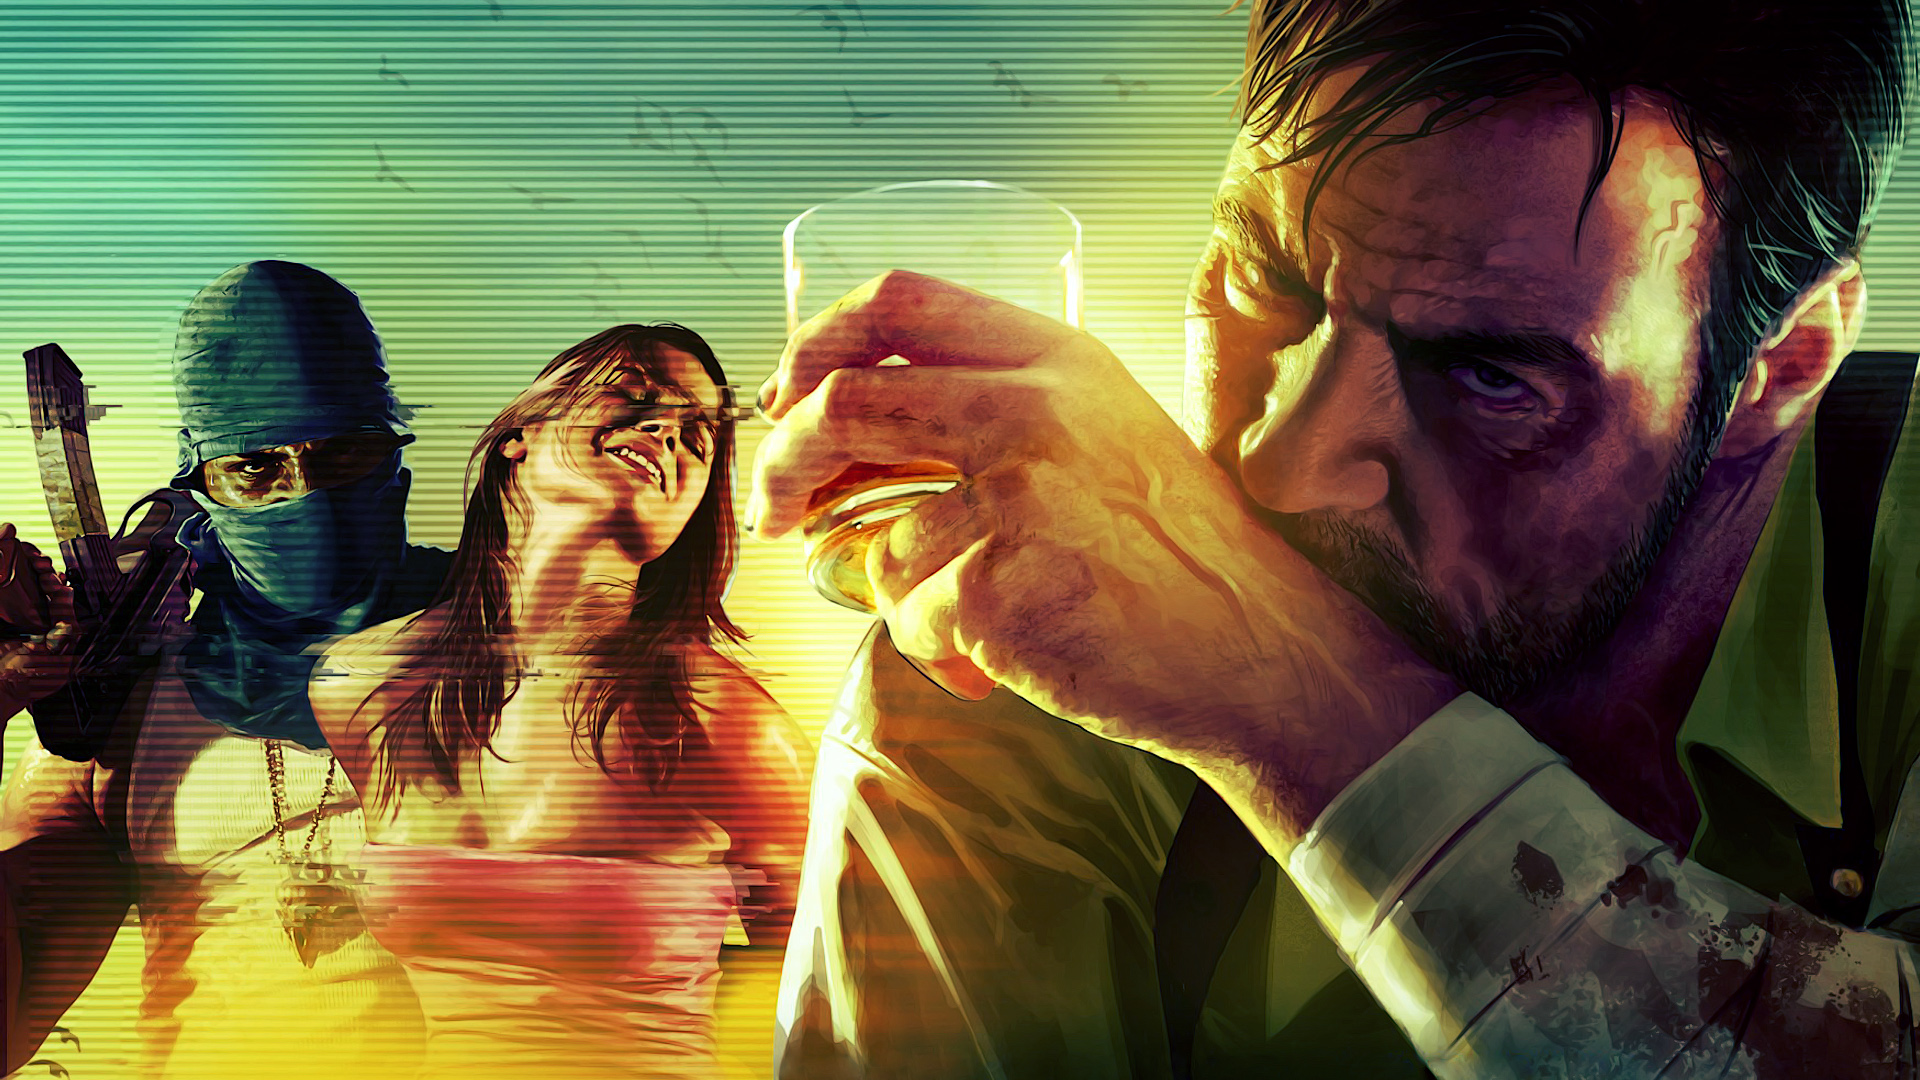 Max Payne 3 desktop wallpaper showcasing video game aesthetics for immersive gaming experience.